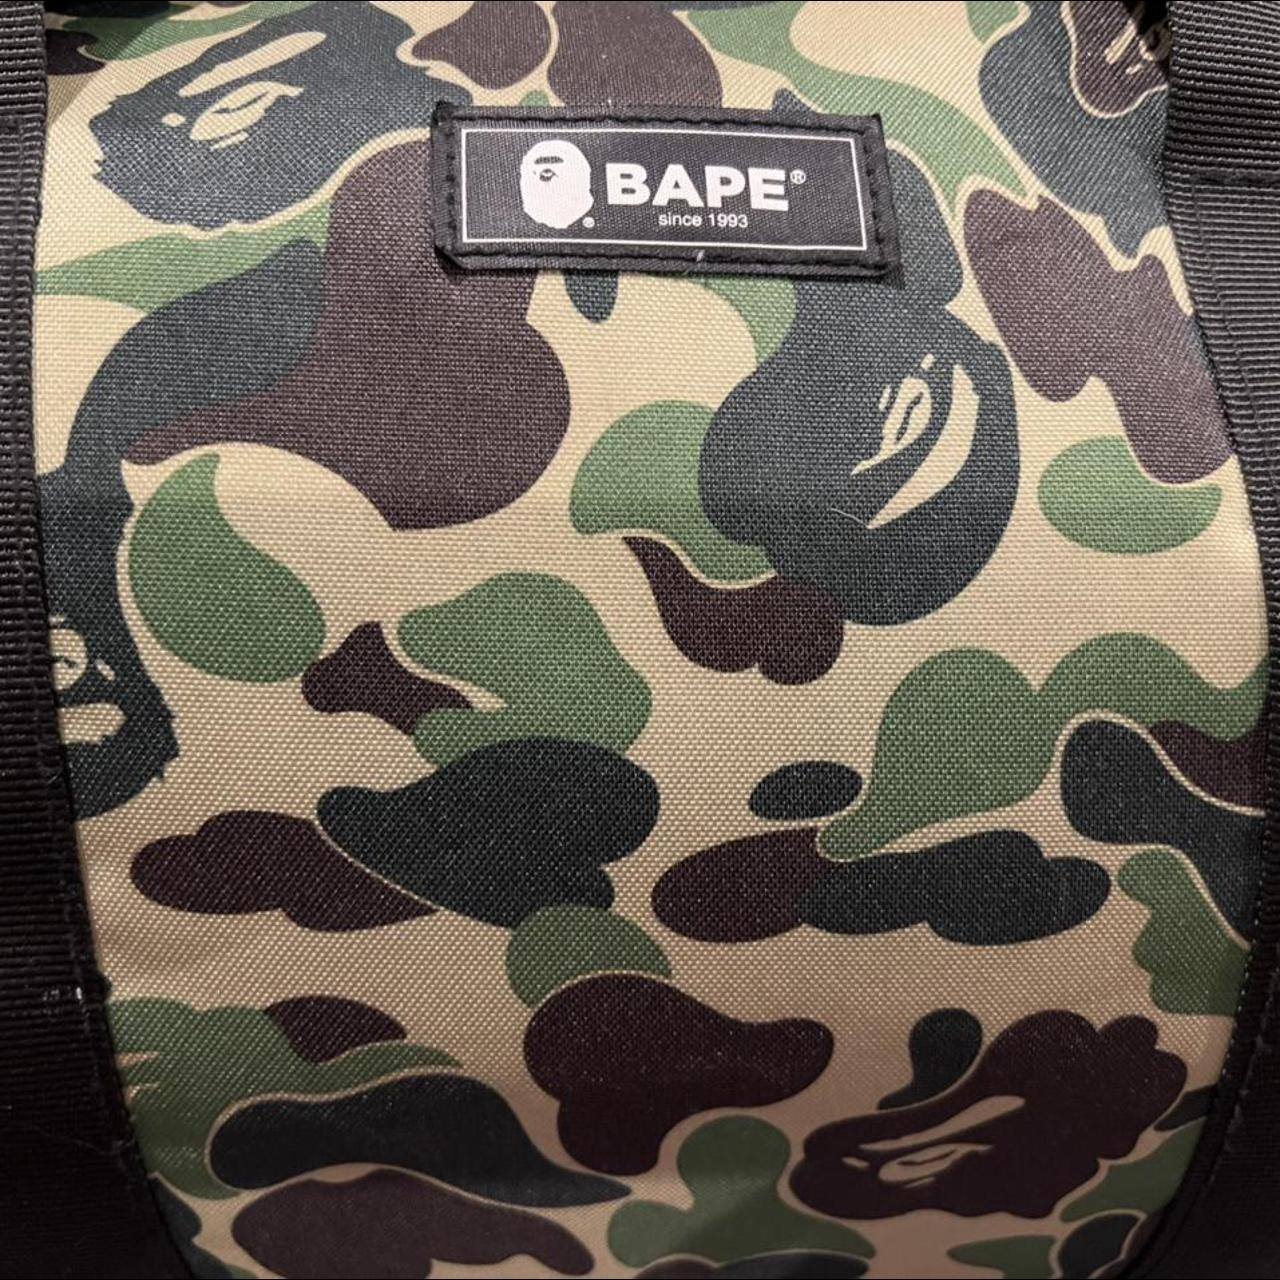 Cool BAPE duffle bag for your baecation or gym brand - Depop